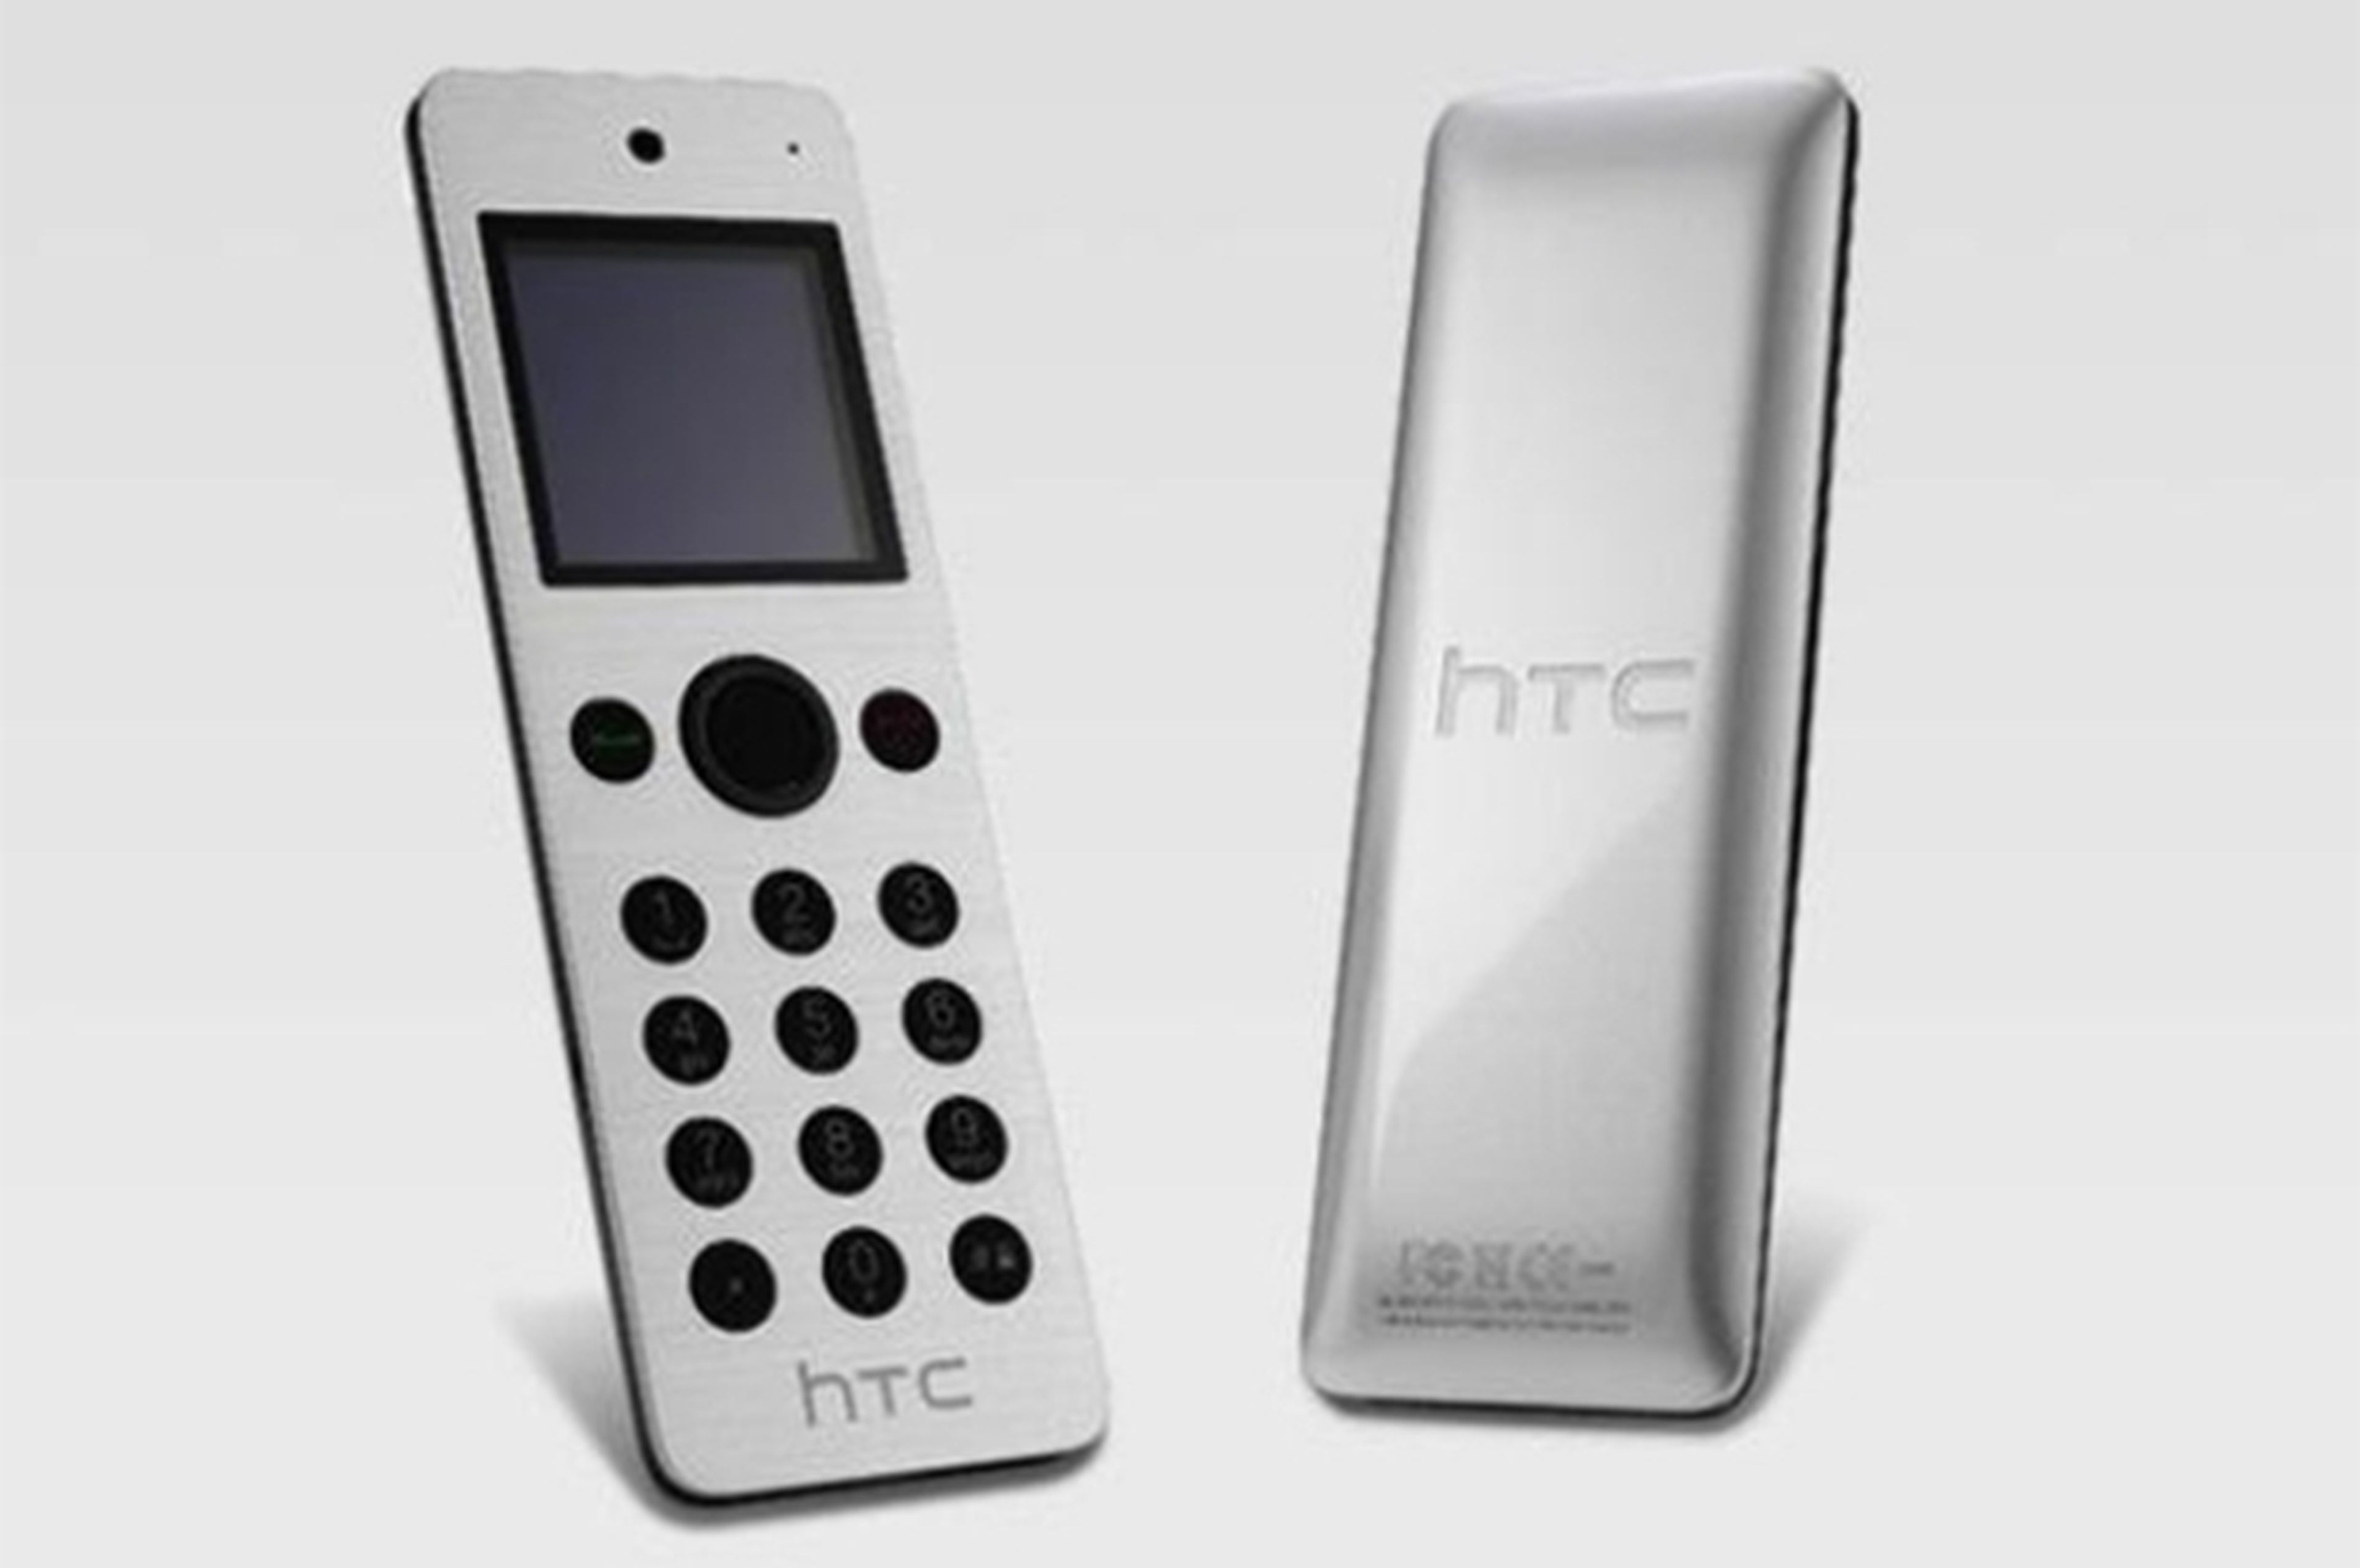 HTC Mini +, un gadget para hacer multitarea con tu smartphone